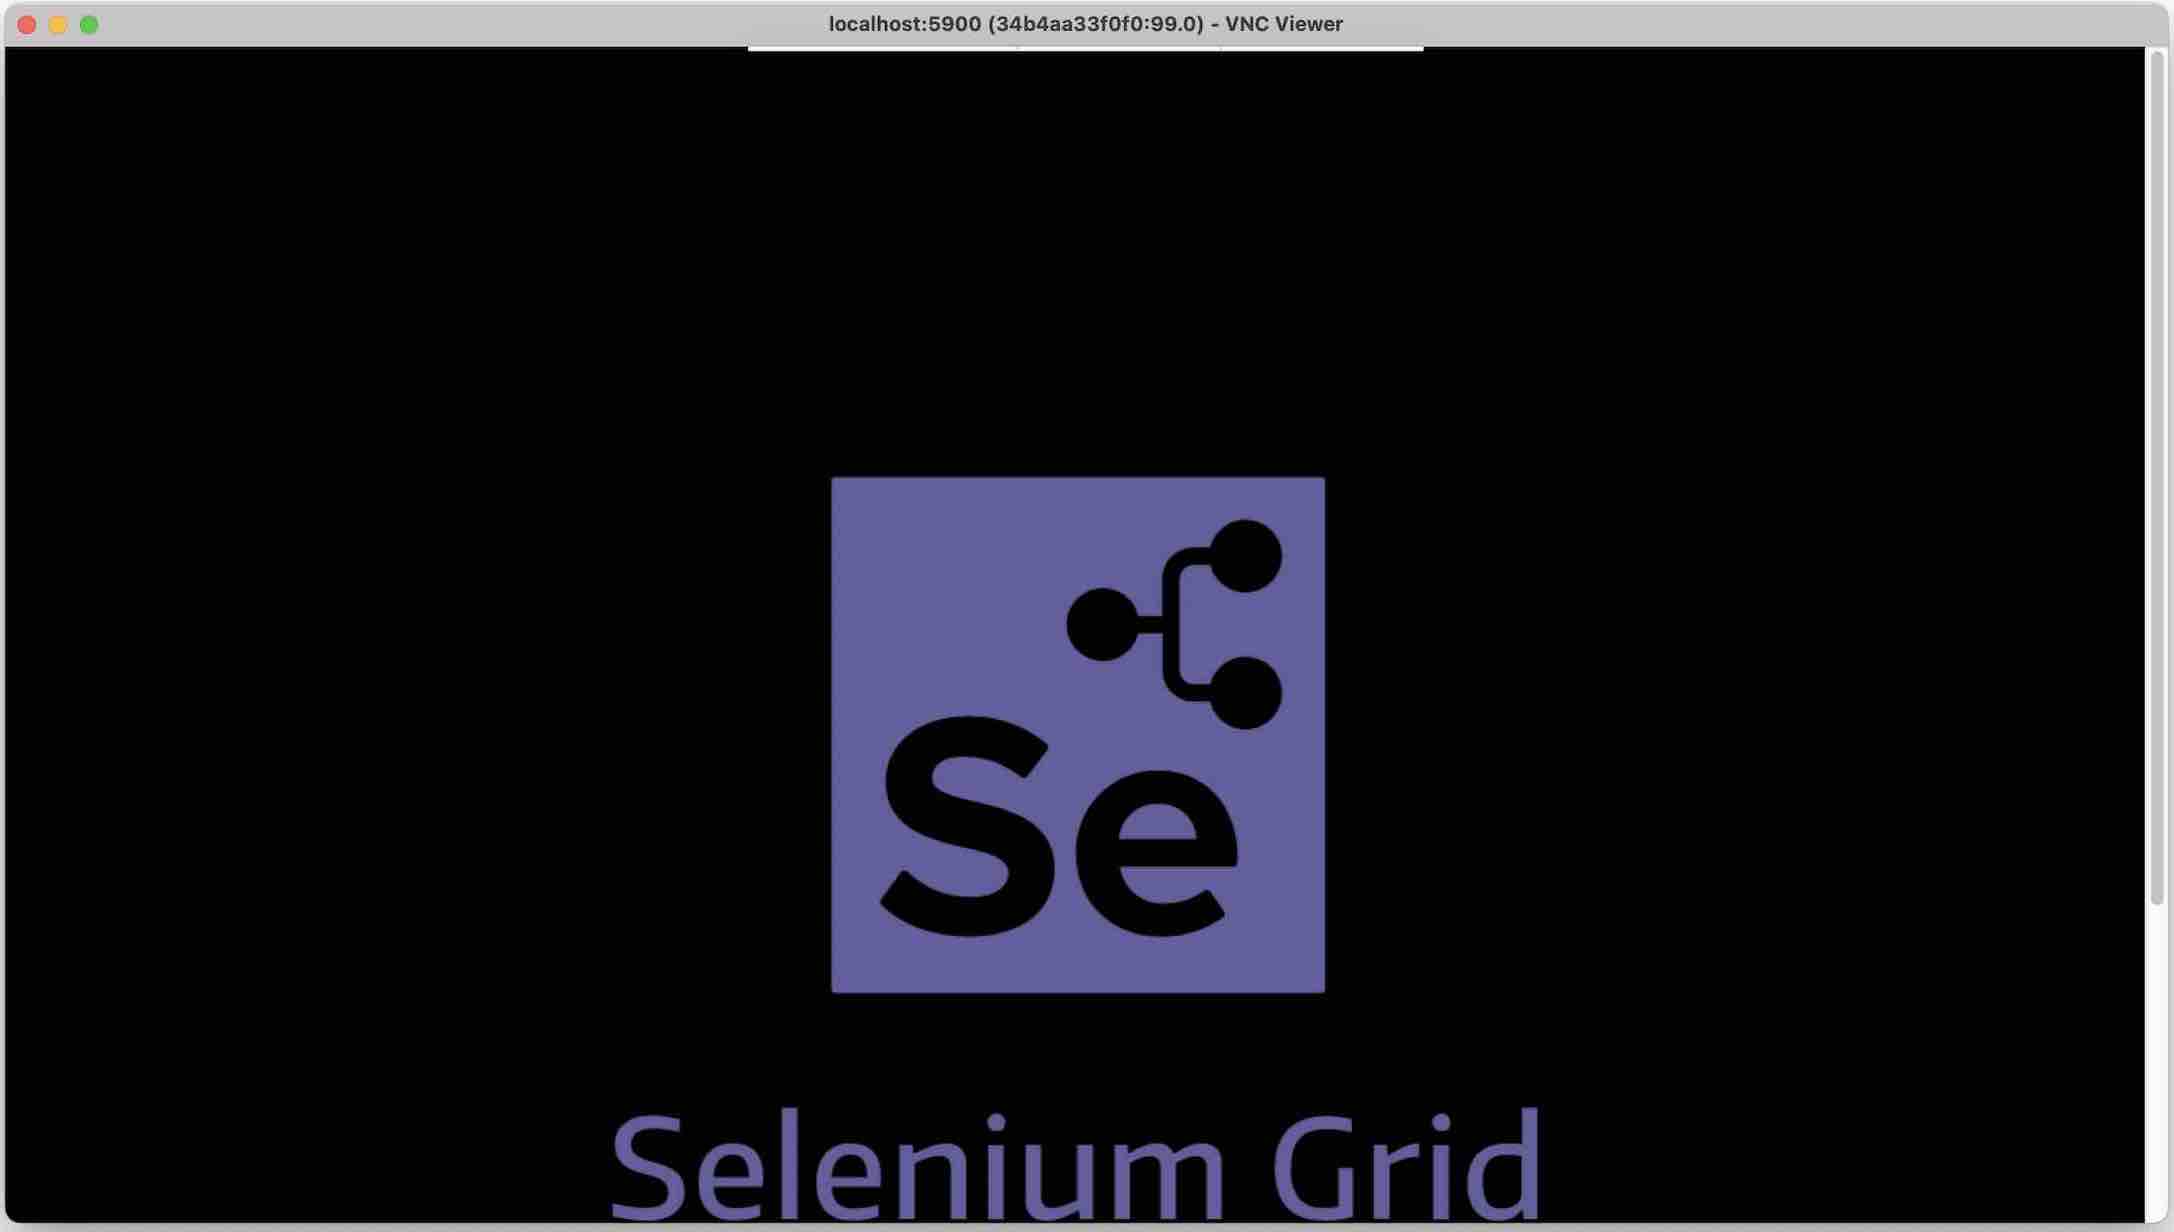 使用 VNC Viewer 查看 Selenium Grid 运行桌面